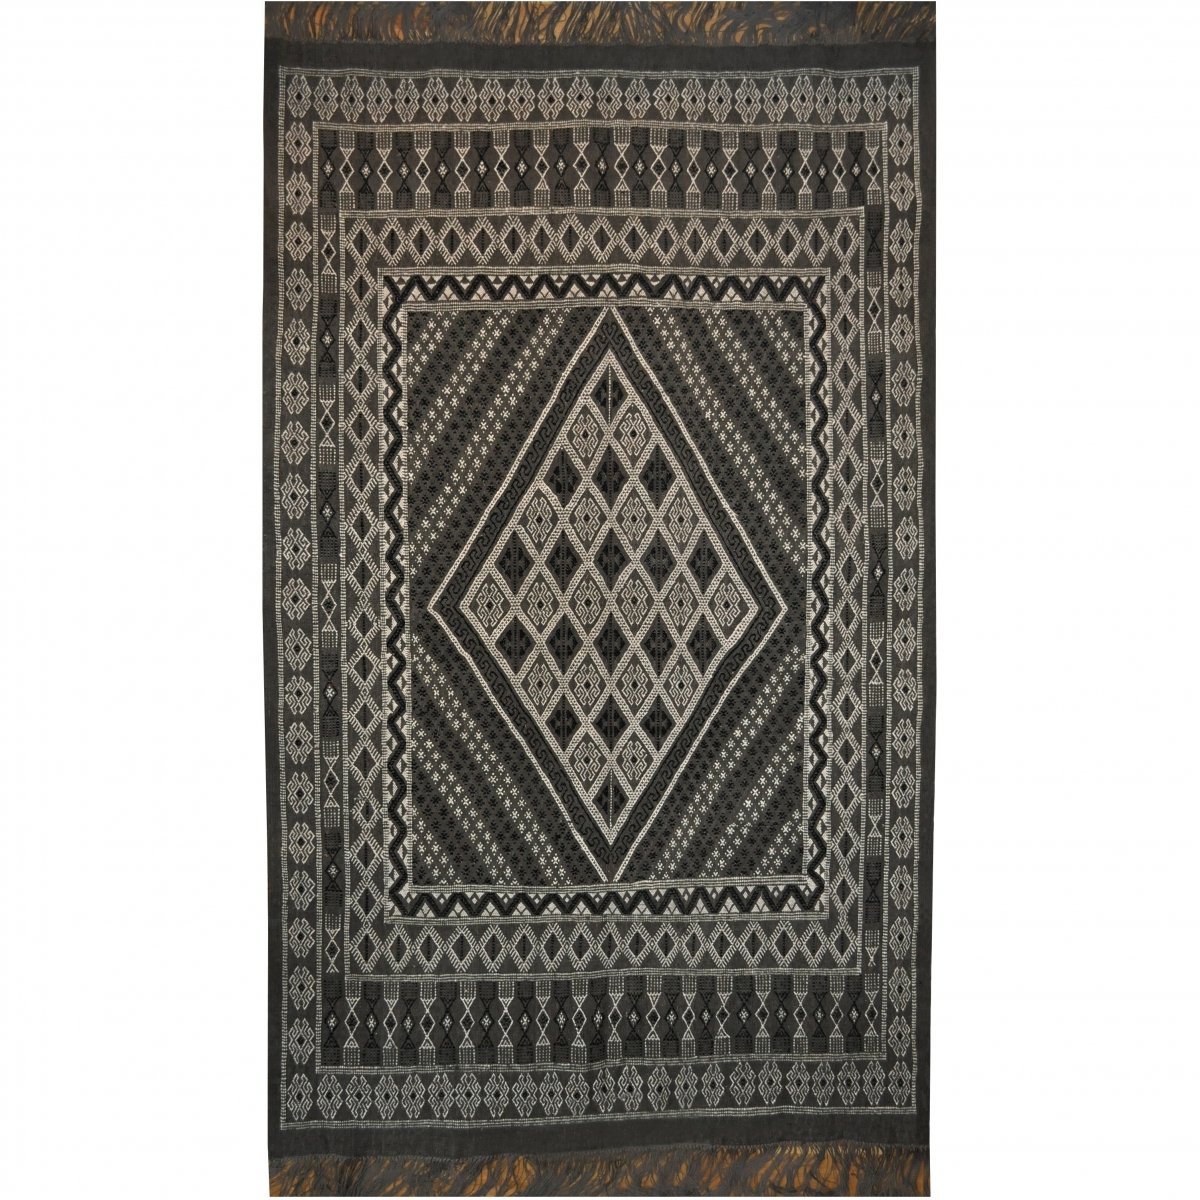 Berber carpet Large Rug Margoum Kesra 165x250 Grey anthracite (Handmade, Wool) Tunisian margoum rug from the city of Kairouan. R